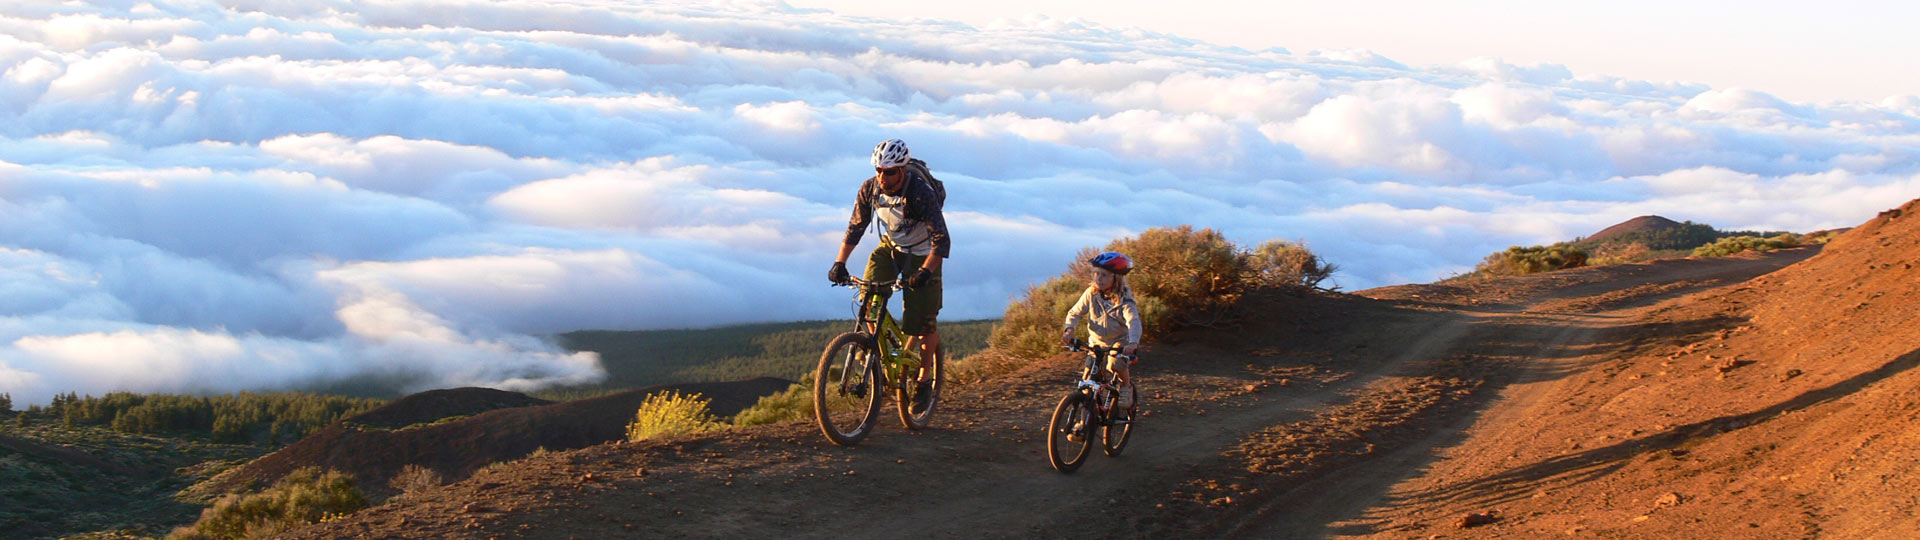 Rodzina na rowerach MTB na Teneryfie nad morzem chmur 